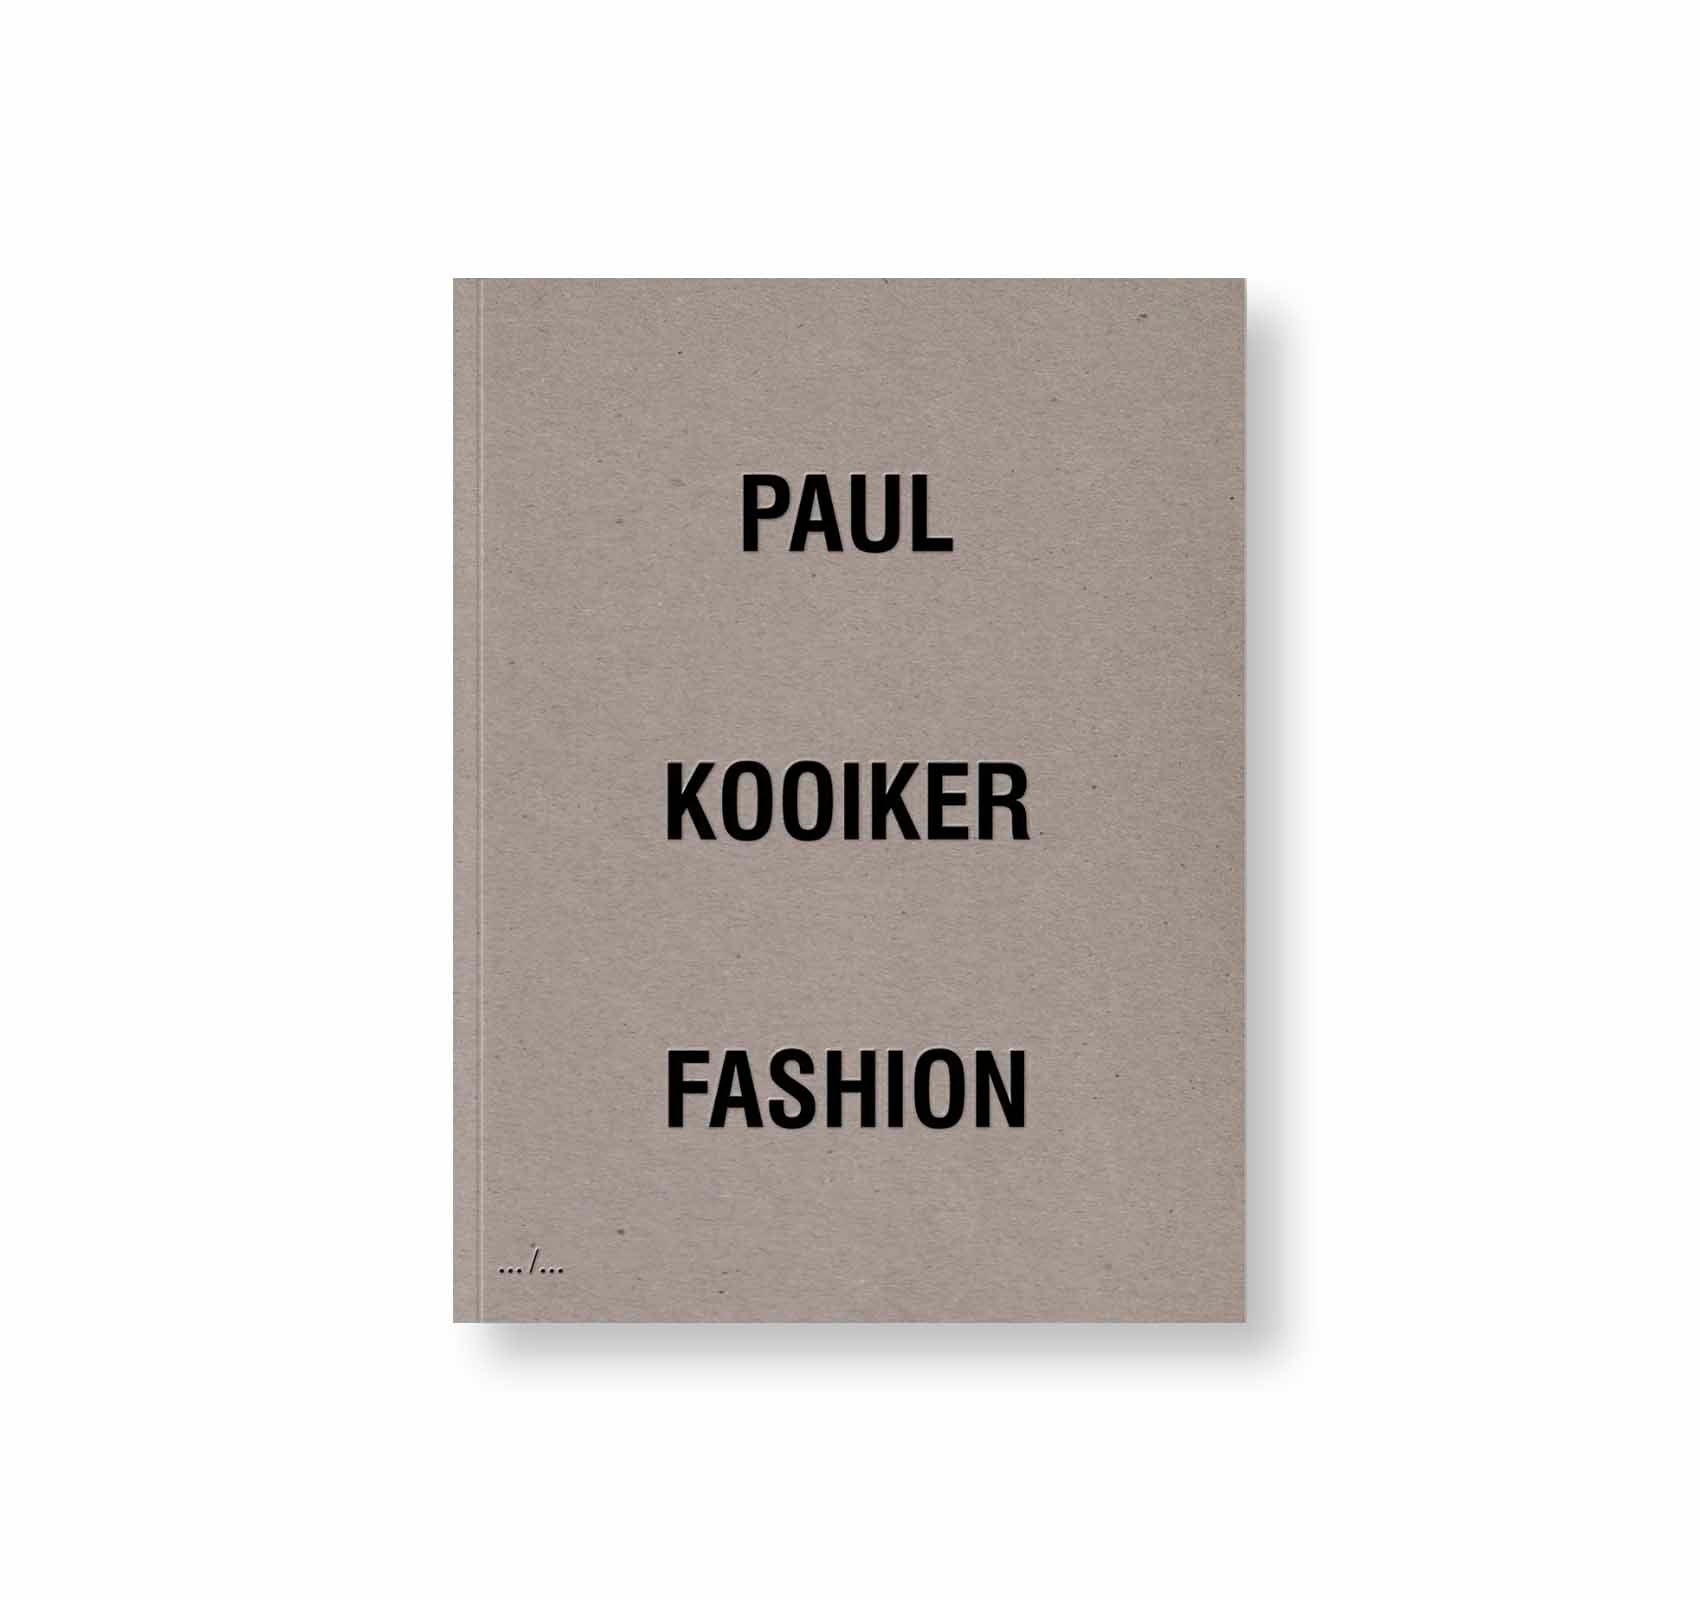 FASHION by Paul Kooiker [SIGNED]